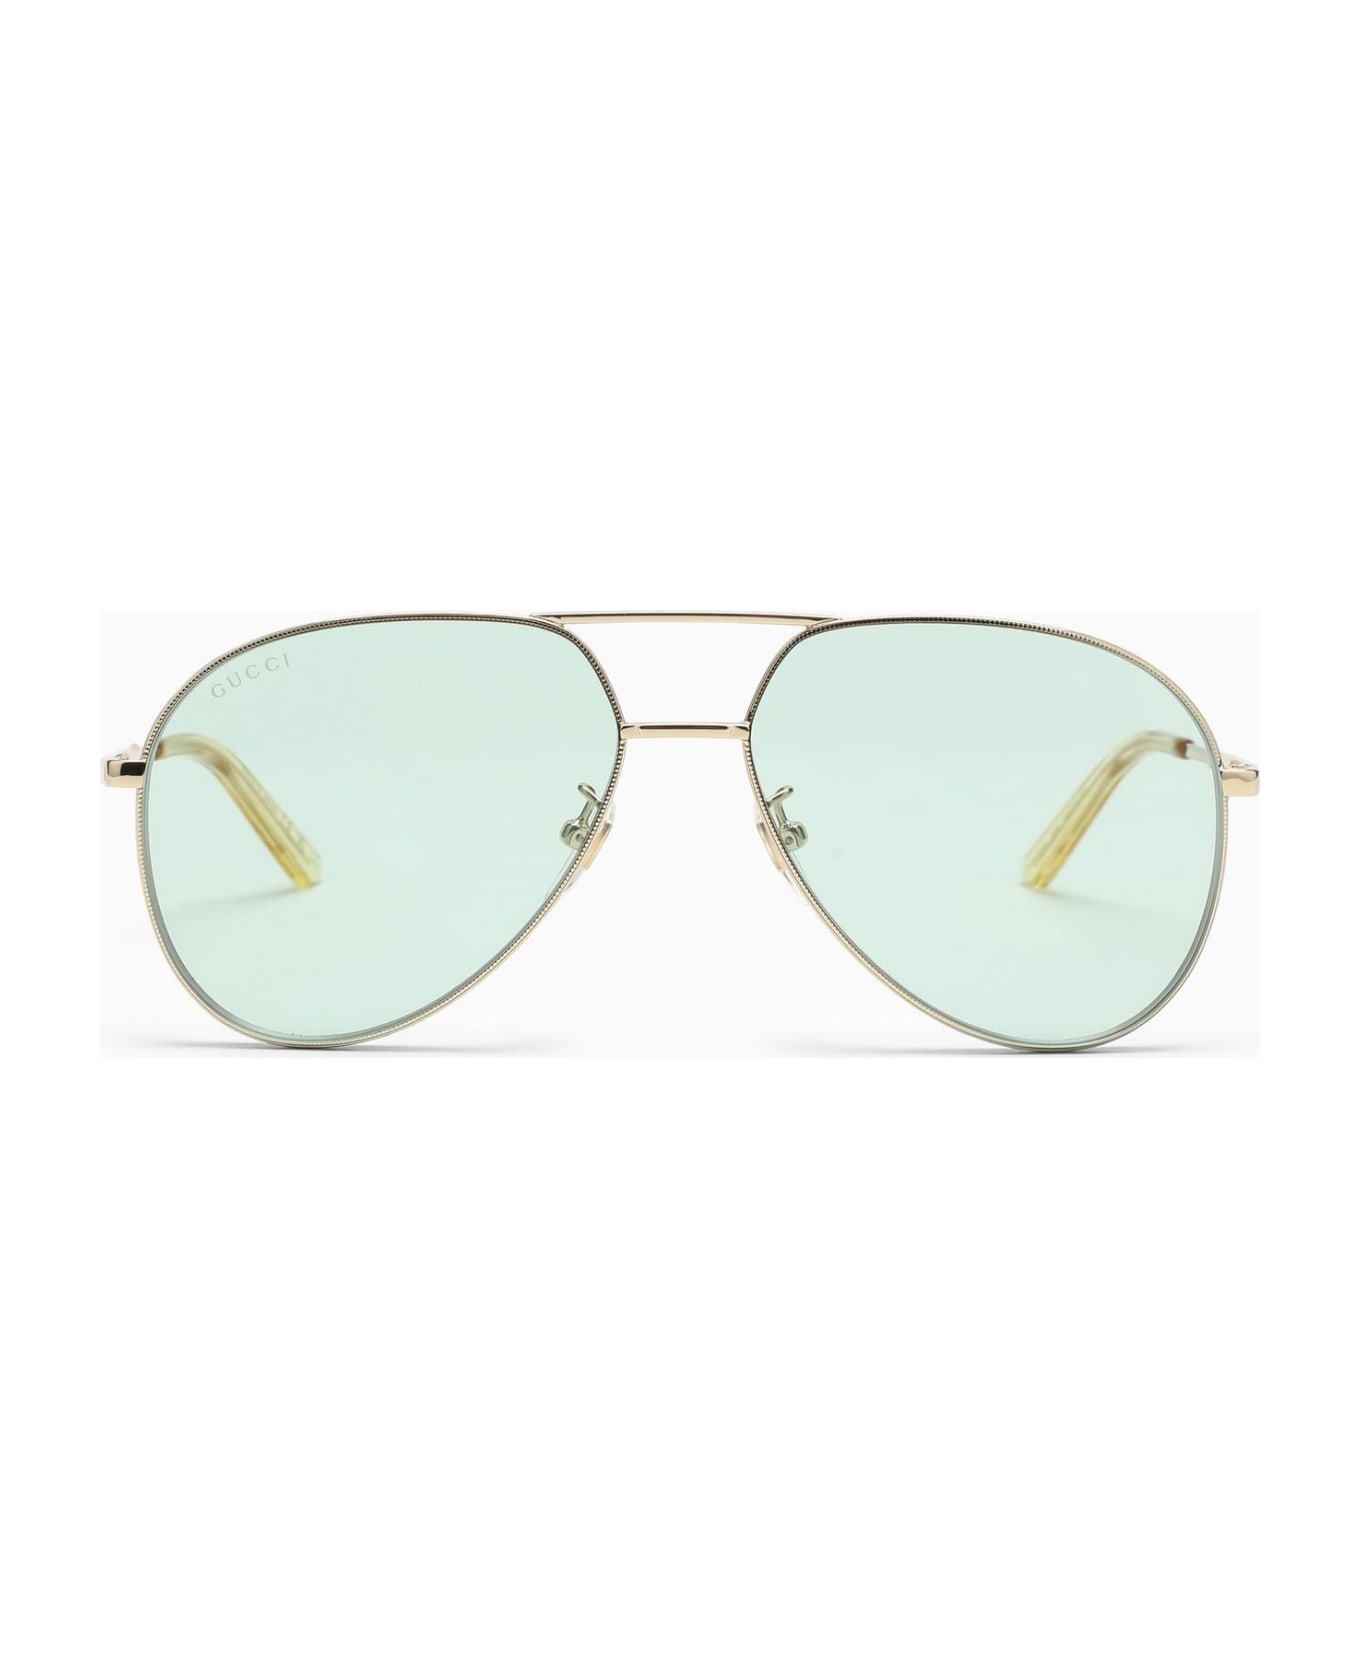 Gucci Eyewear Aviator Green Sunglasses サングラス